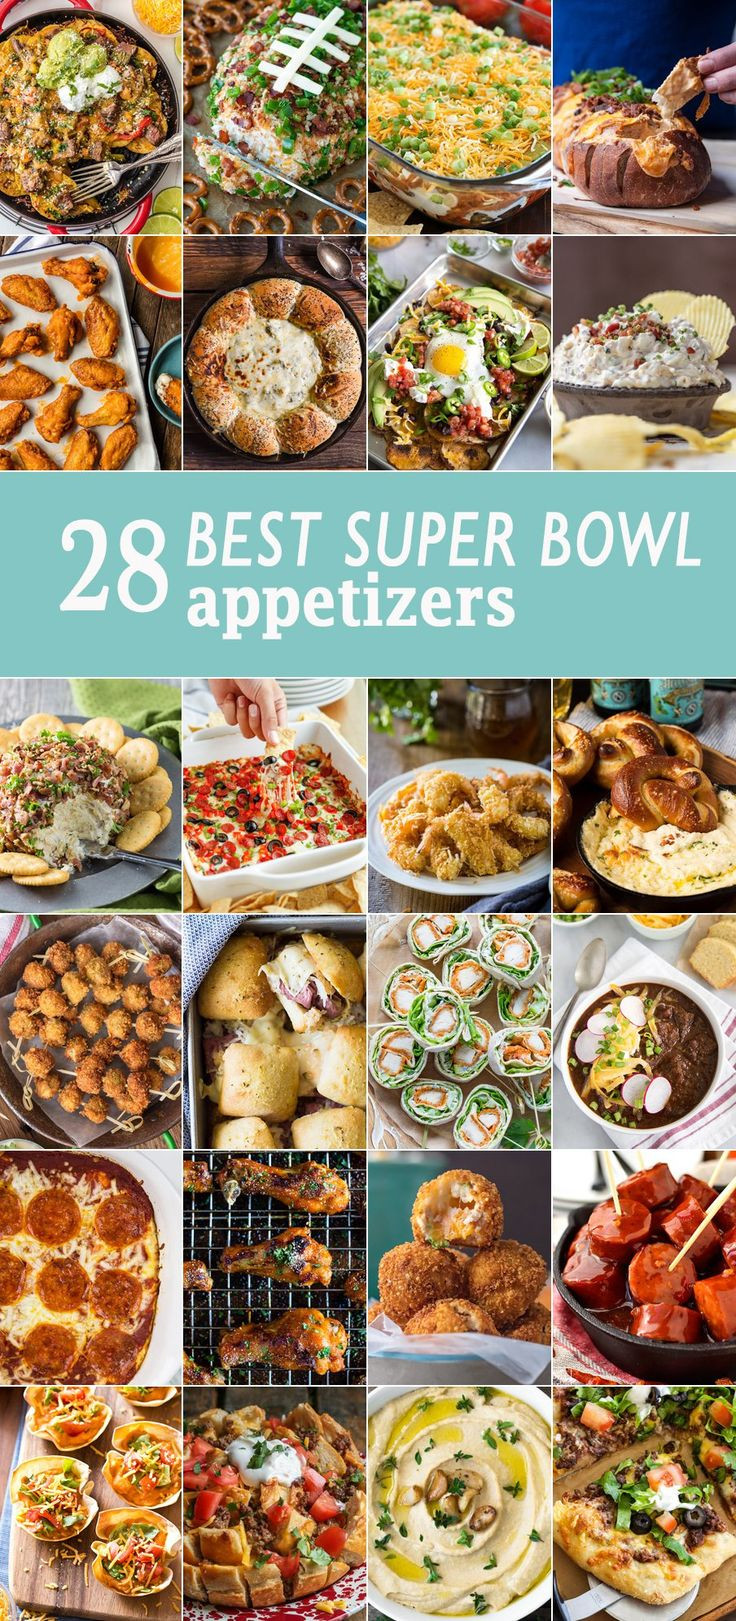 Super Bowl Munchies Recipes
 Super Bowl Snack Recipe